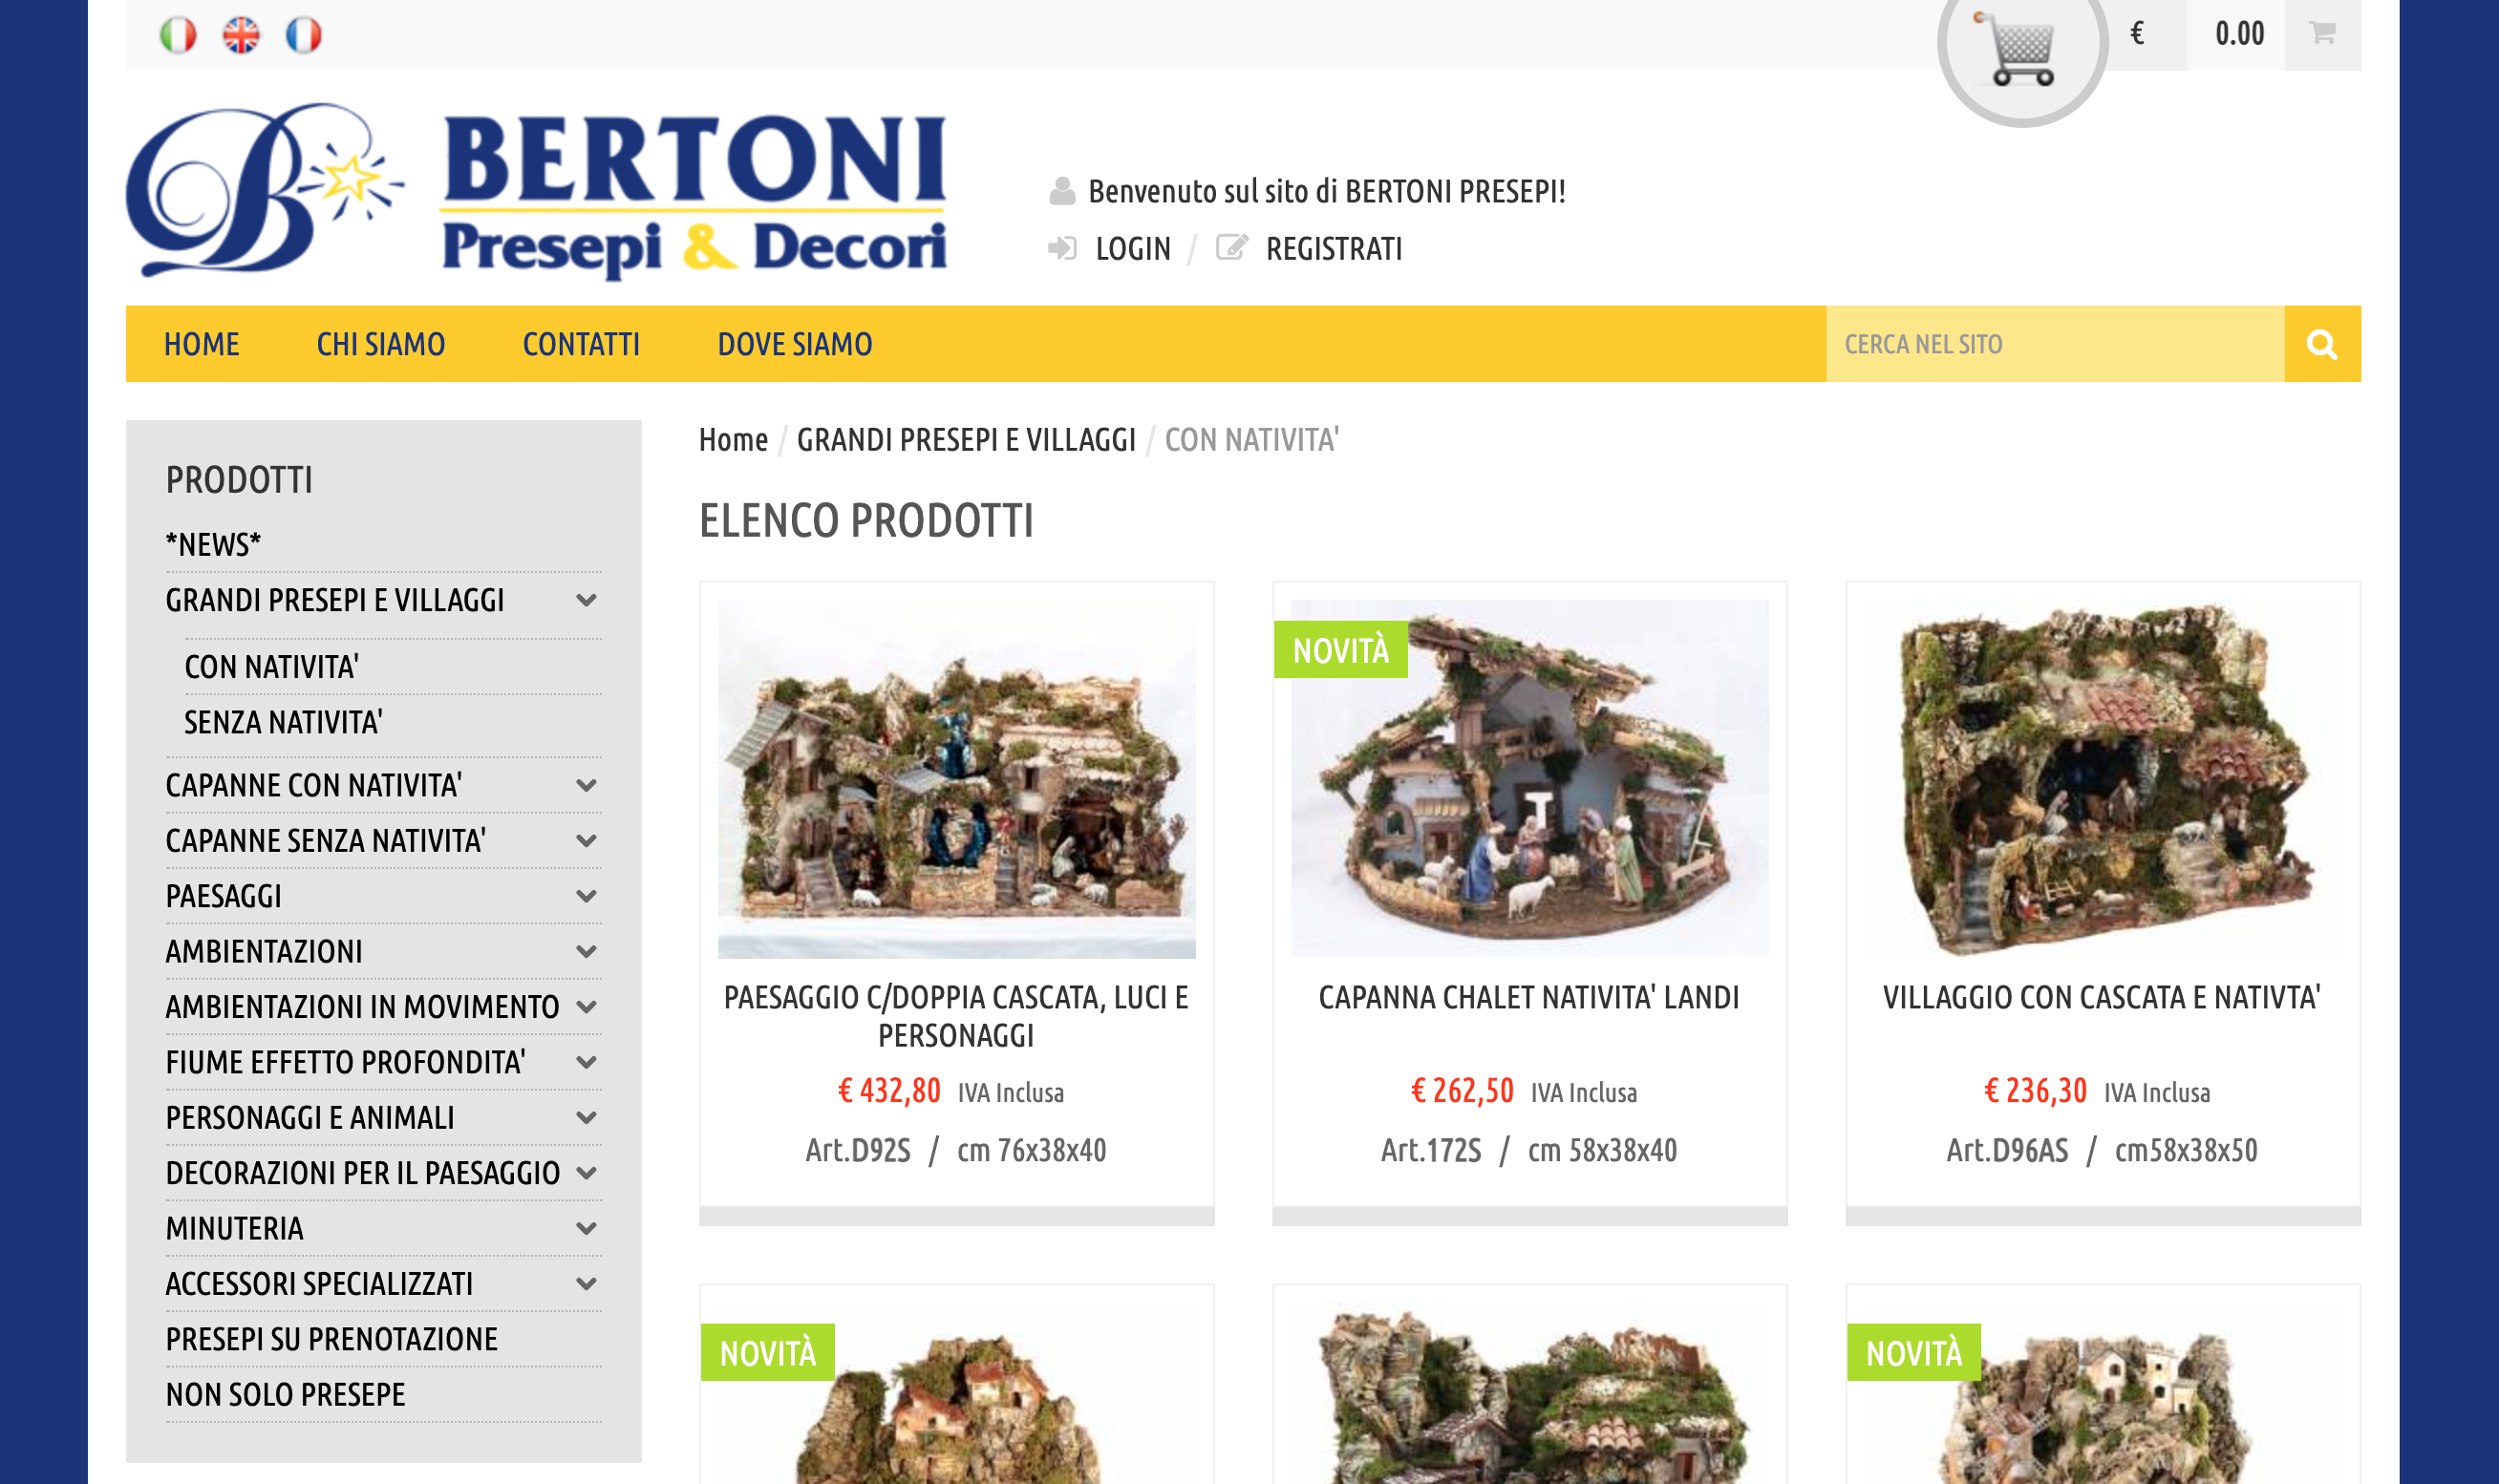 Bertoni Presepi & Decori